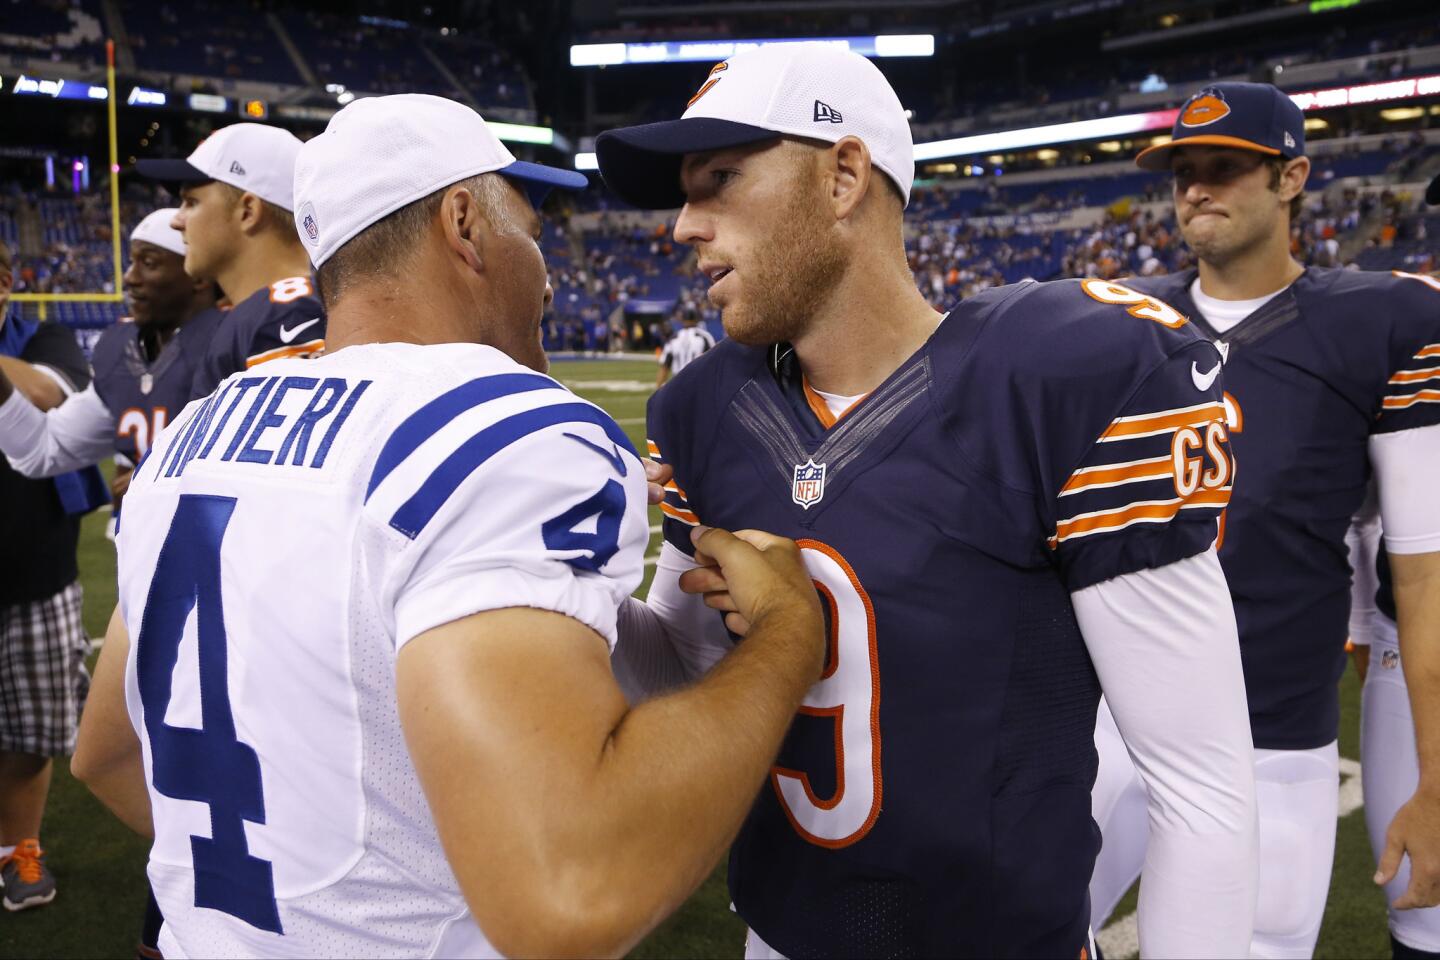 Colts kicker Adam Vinatieri greets Bears kicker Robbie Gould after a preseason game in Indianapolis.